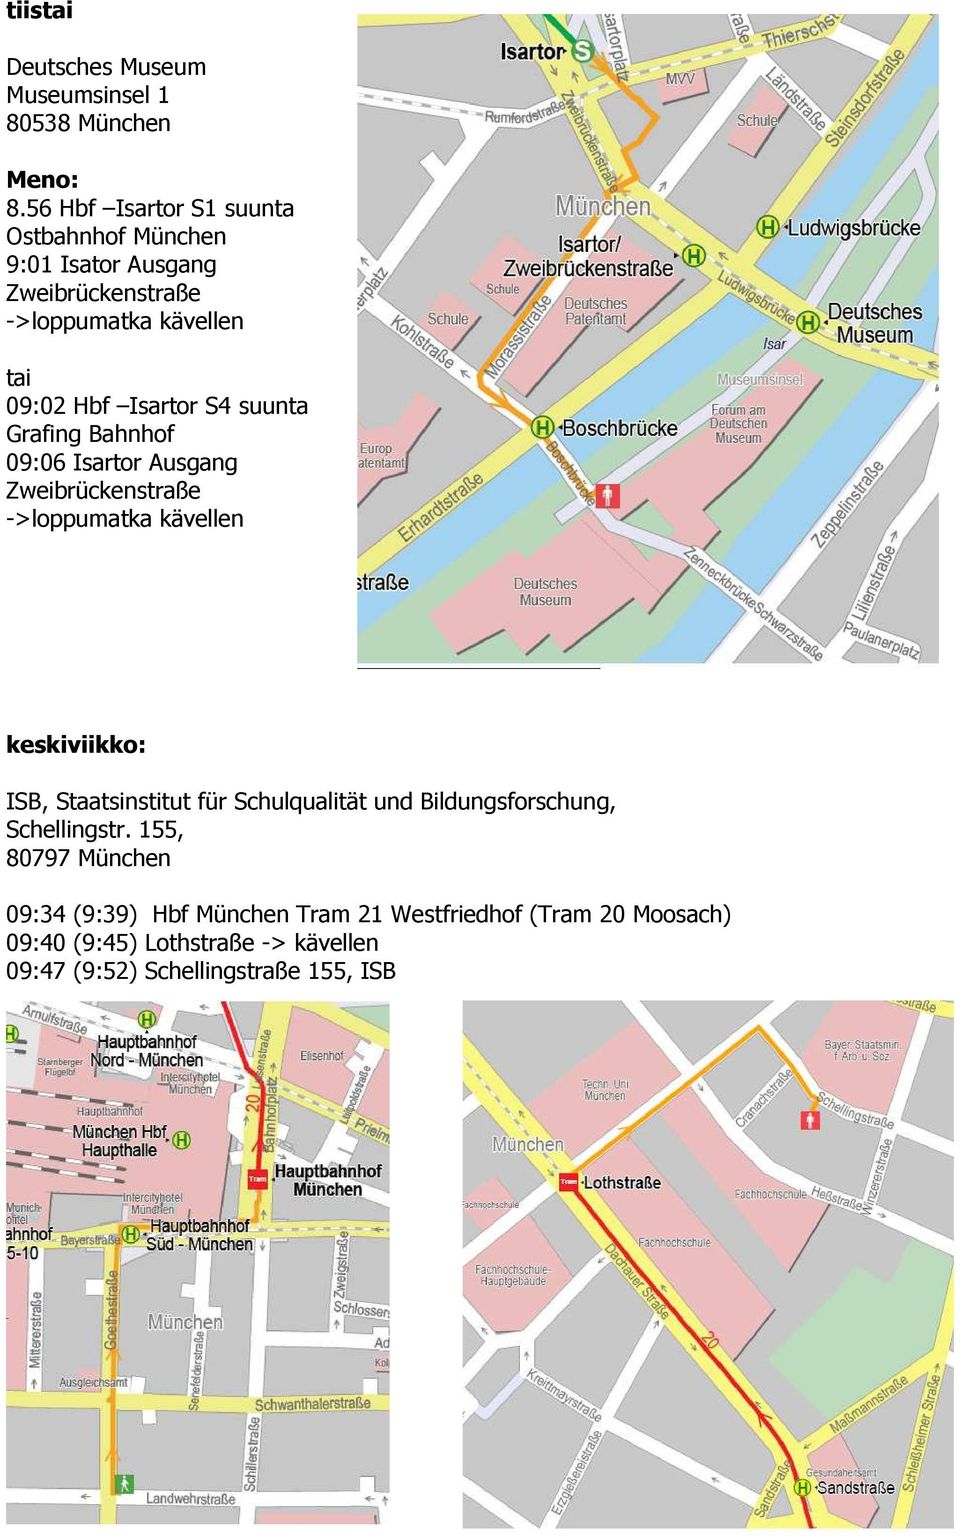 suunta Grafing Bahnhof 09:06 Isartor Ausgang Zweibrückenstraße ->loppumatka kävellen keskiviikko: ISB, Staatsinstitut für